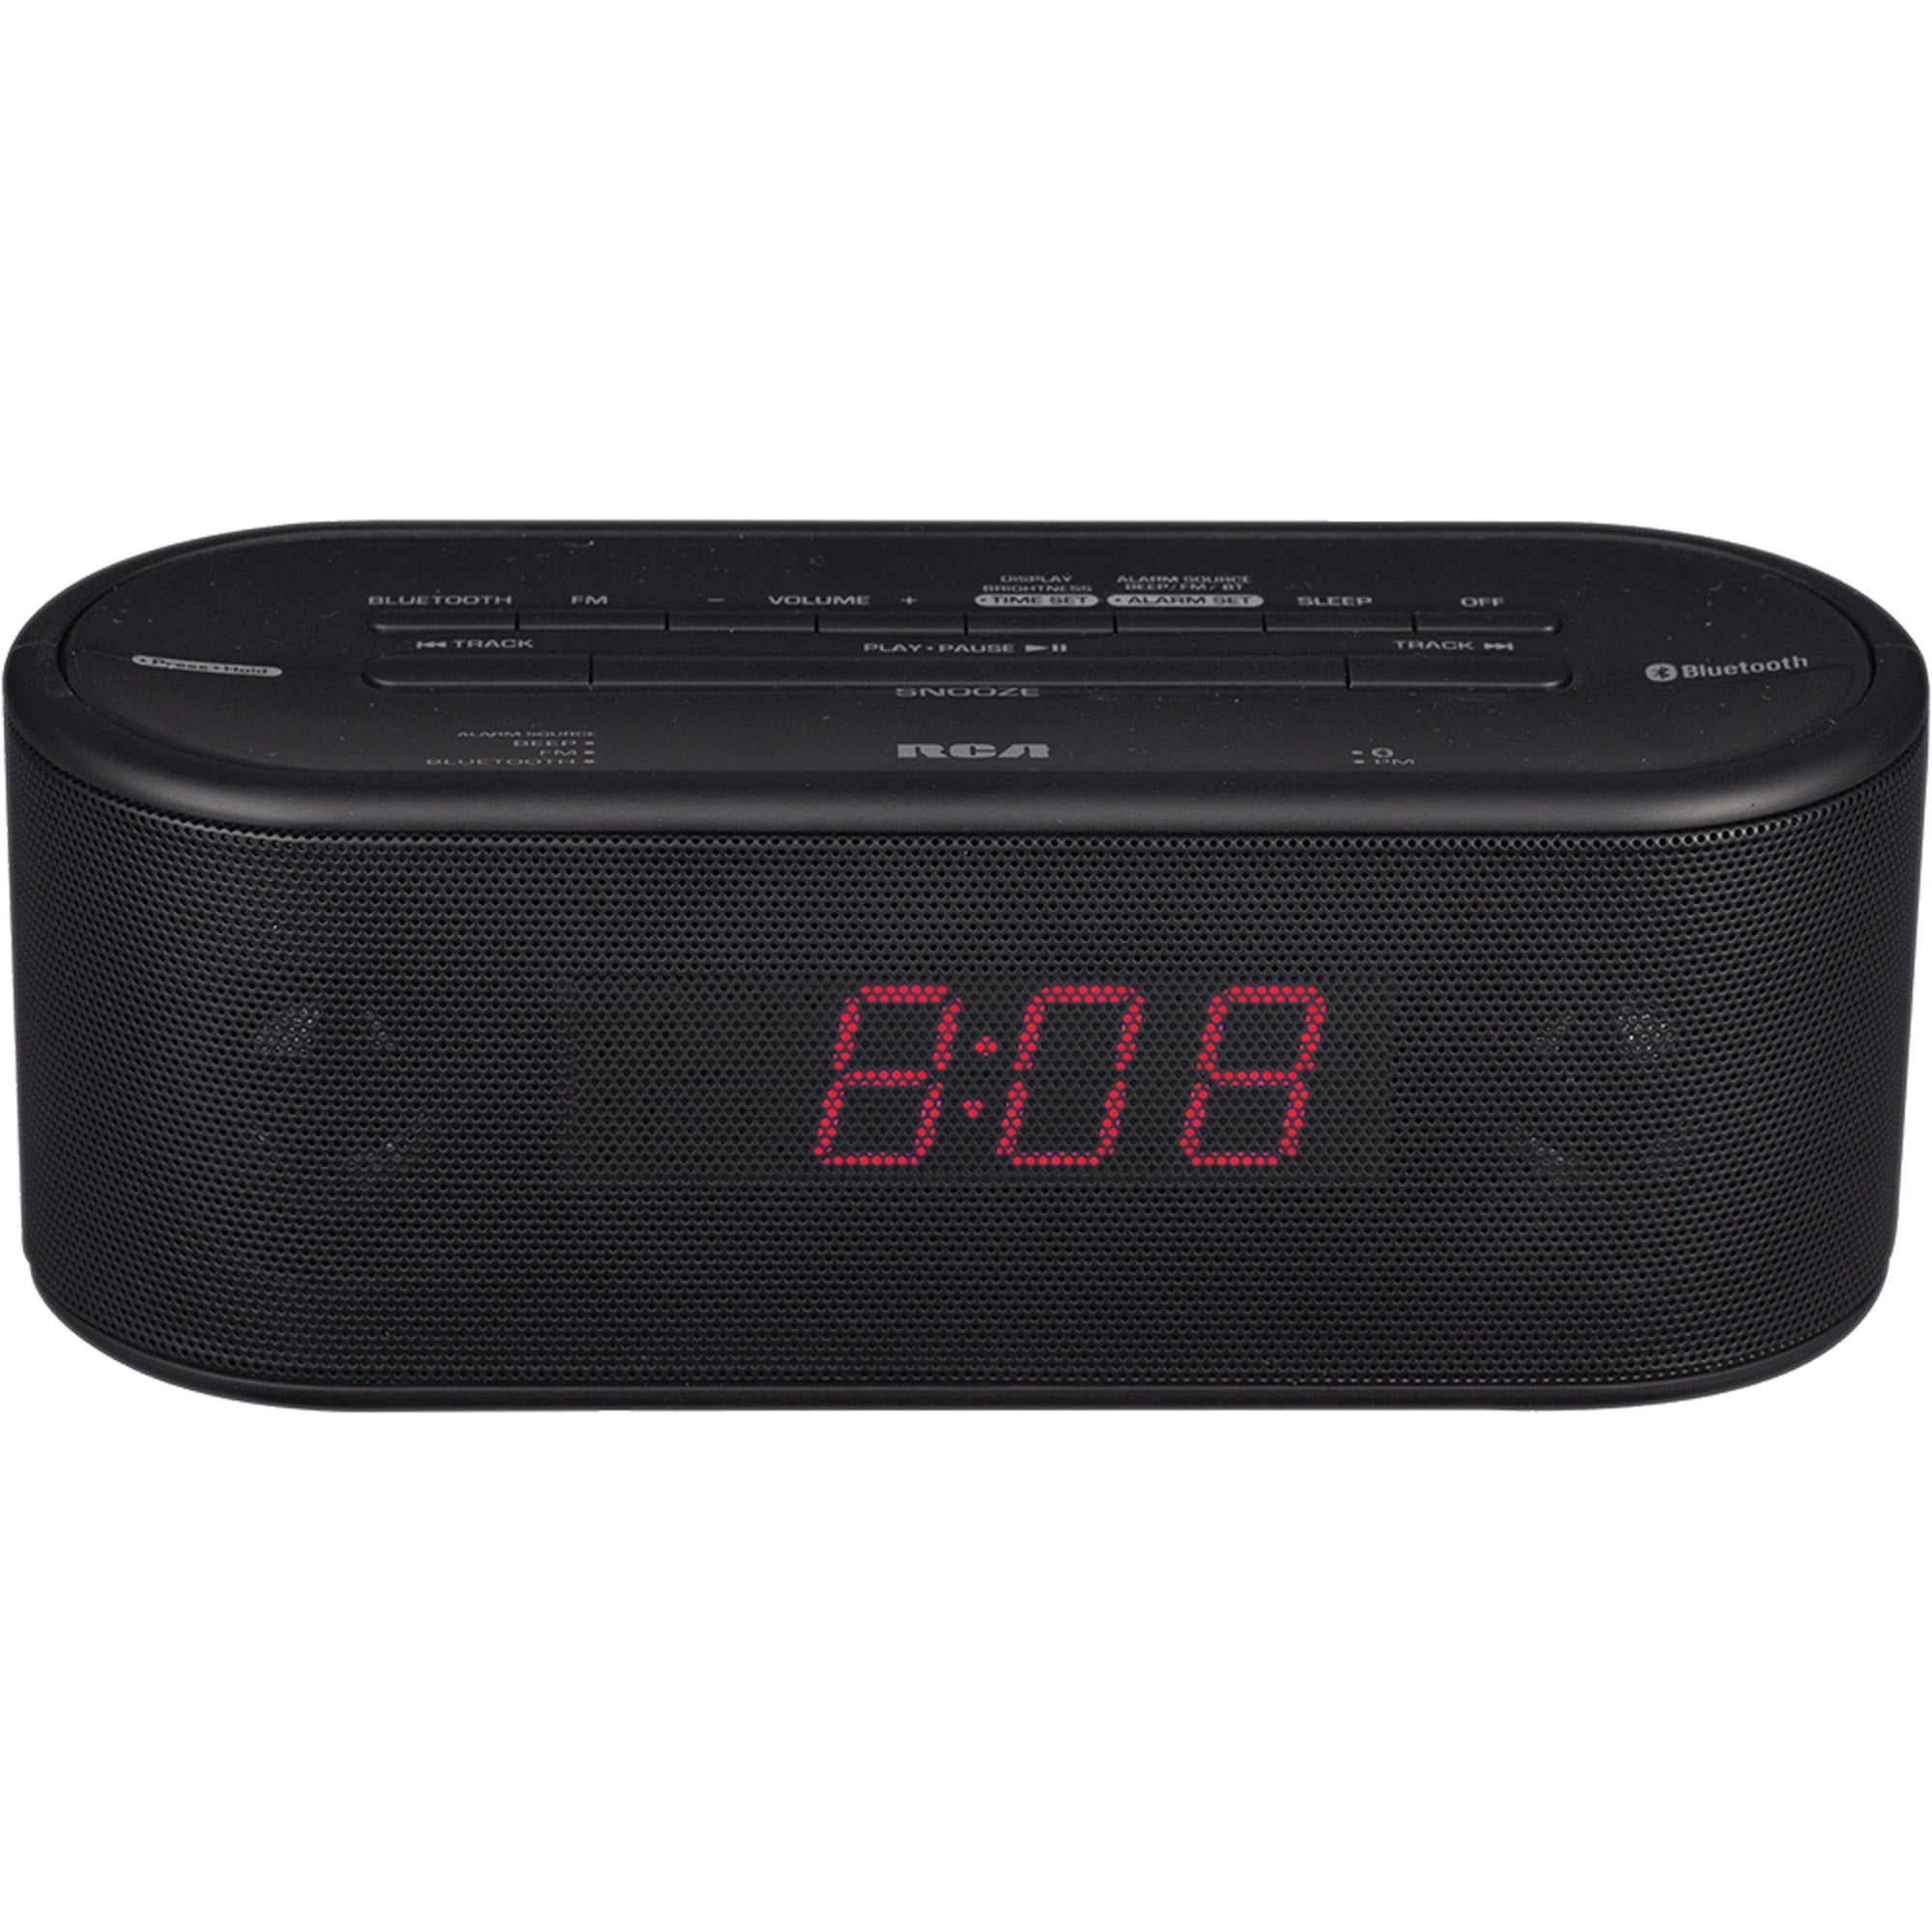 RCA Bluetooth Clock Radio with Stereo - Walmart.com